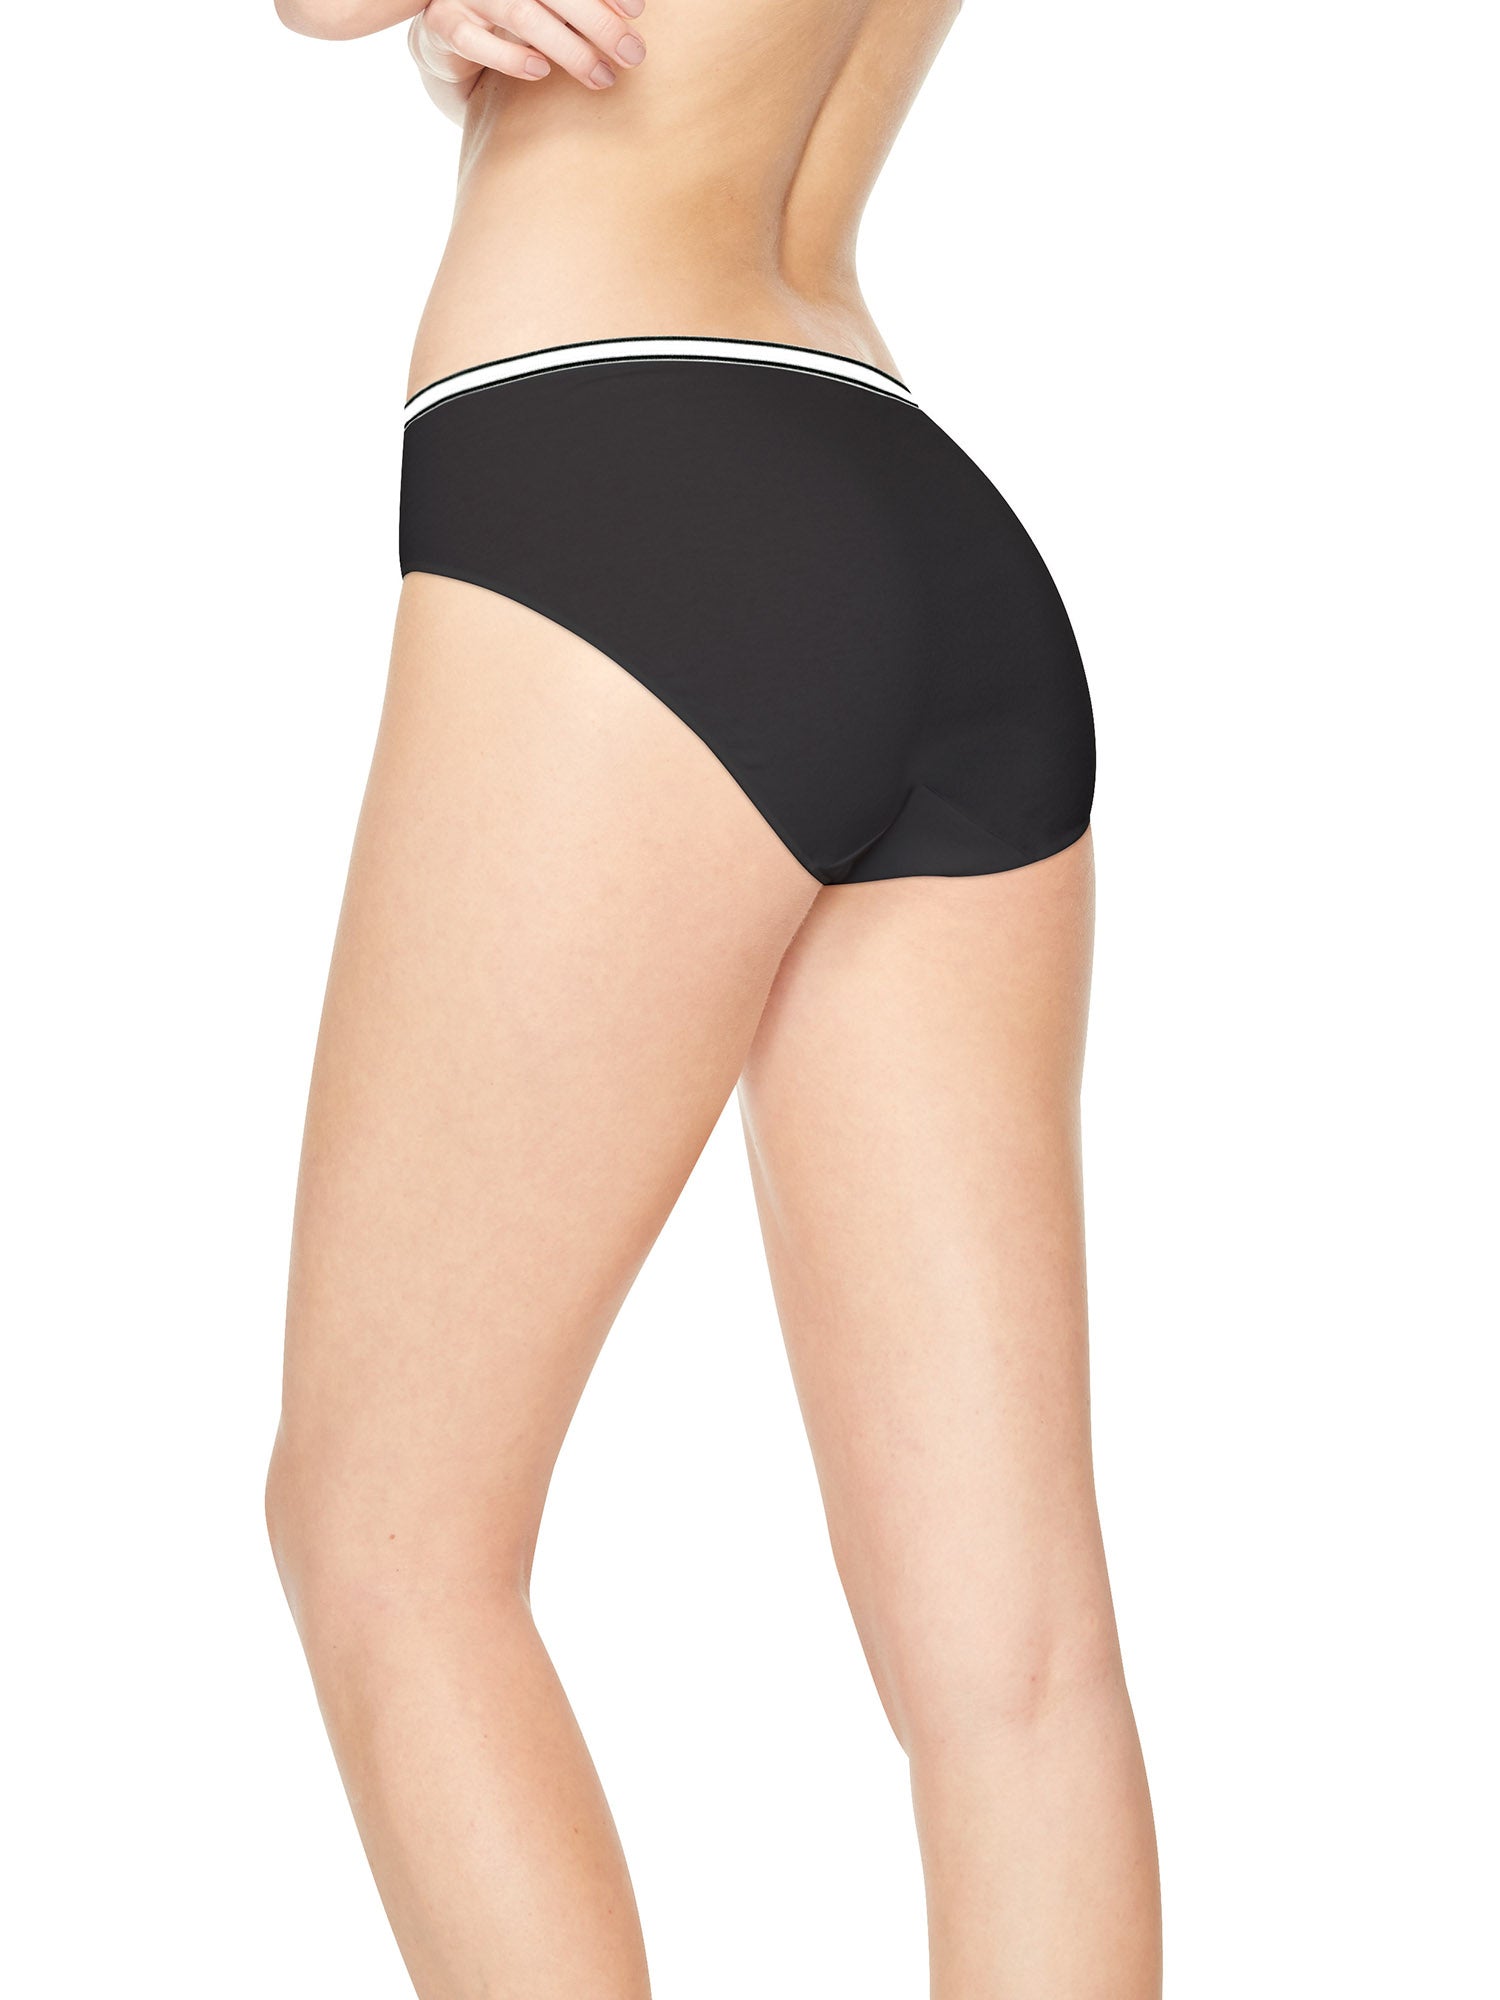 Hanes Women's Cool Comfort Cotton Stretch Thong Underwear, 6-Pack 